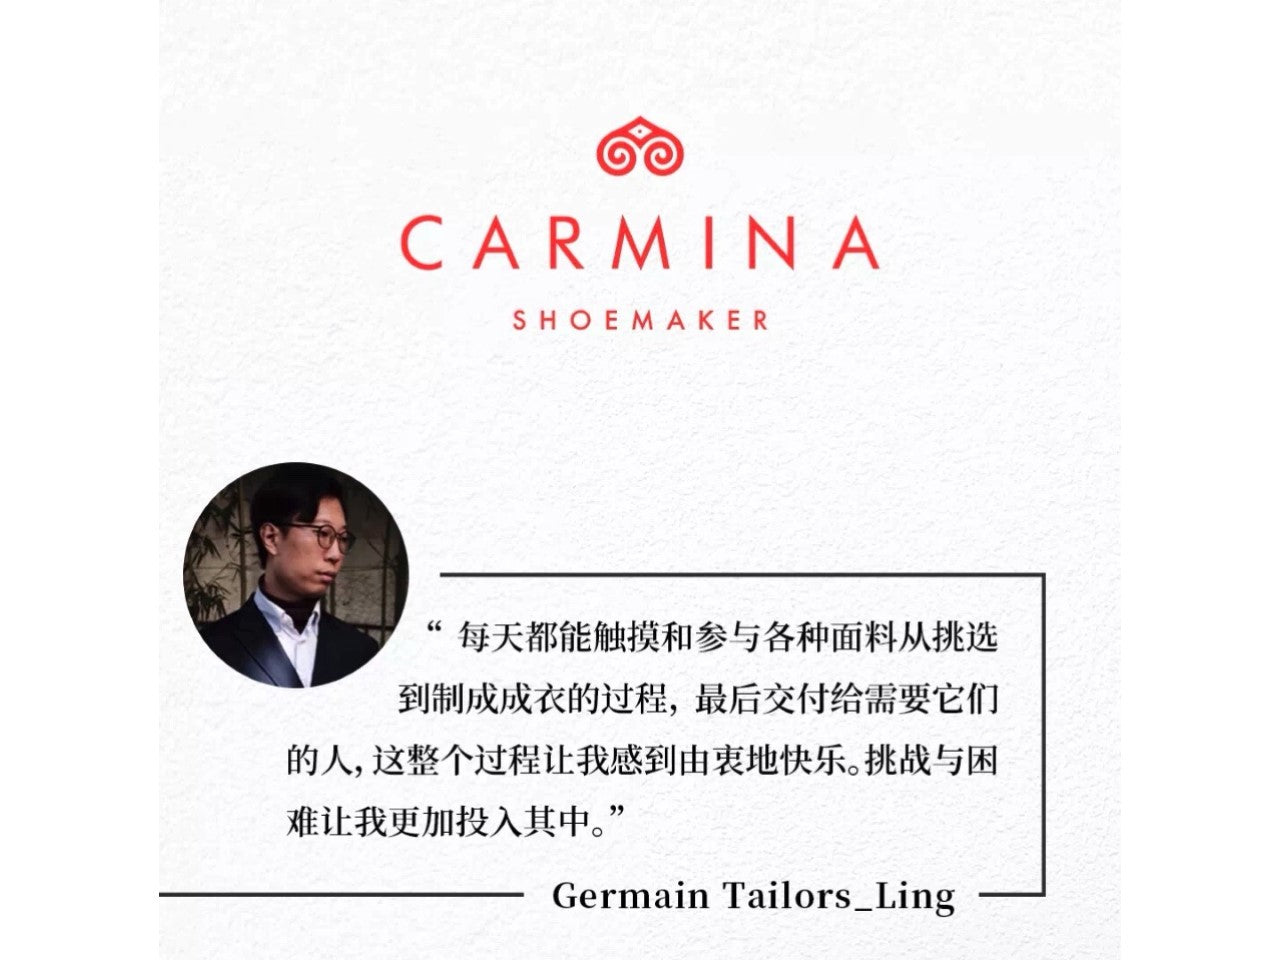 Germain Tailors summer tips for Carmina Shoemaker